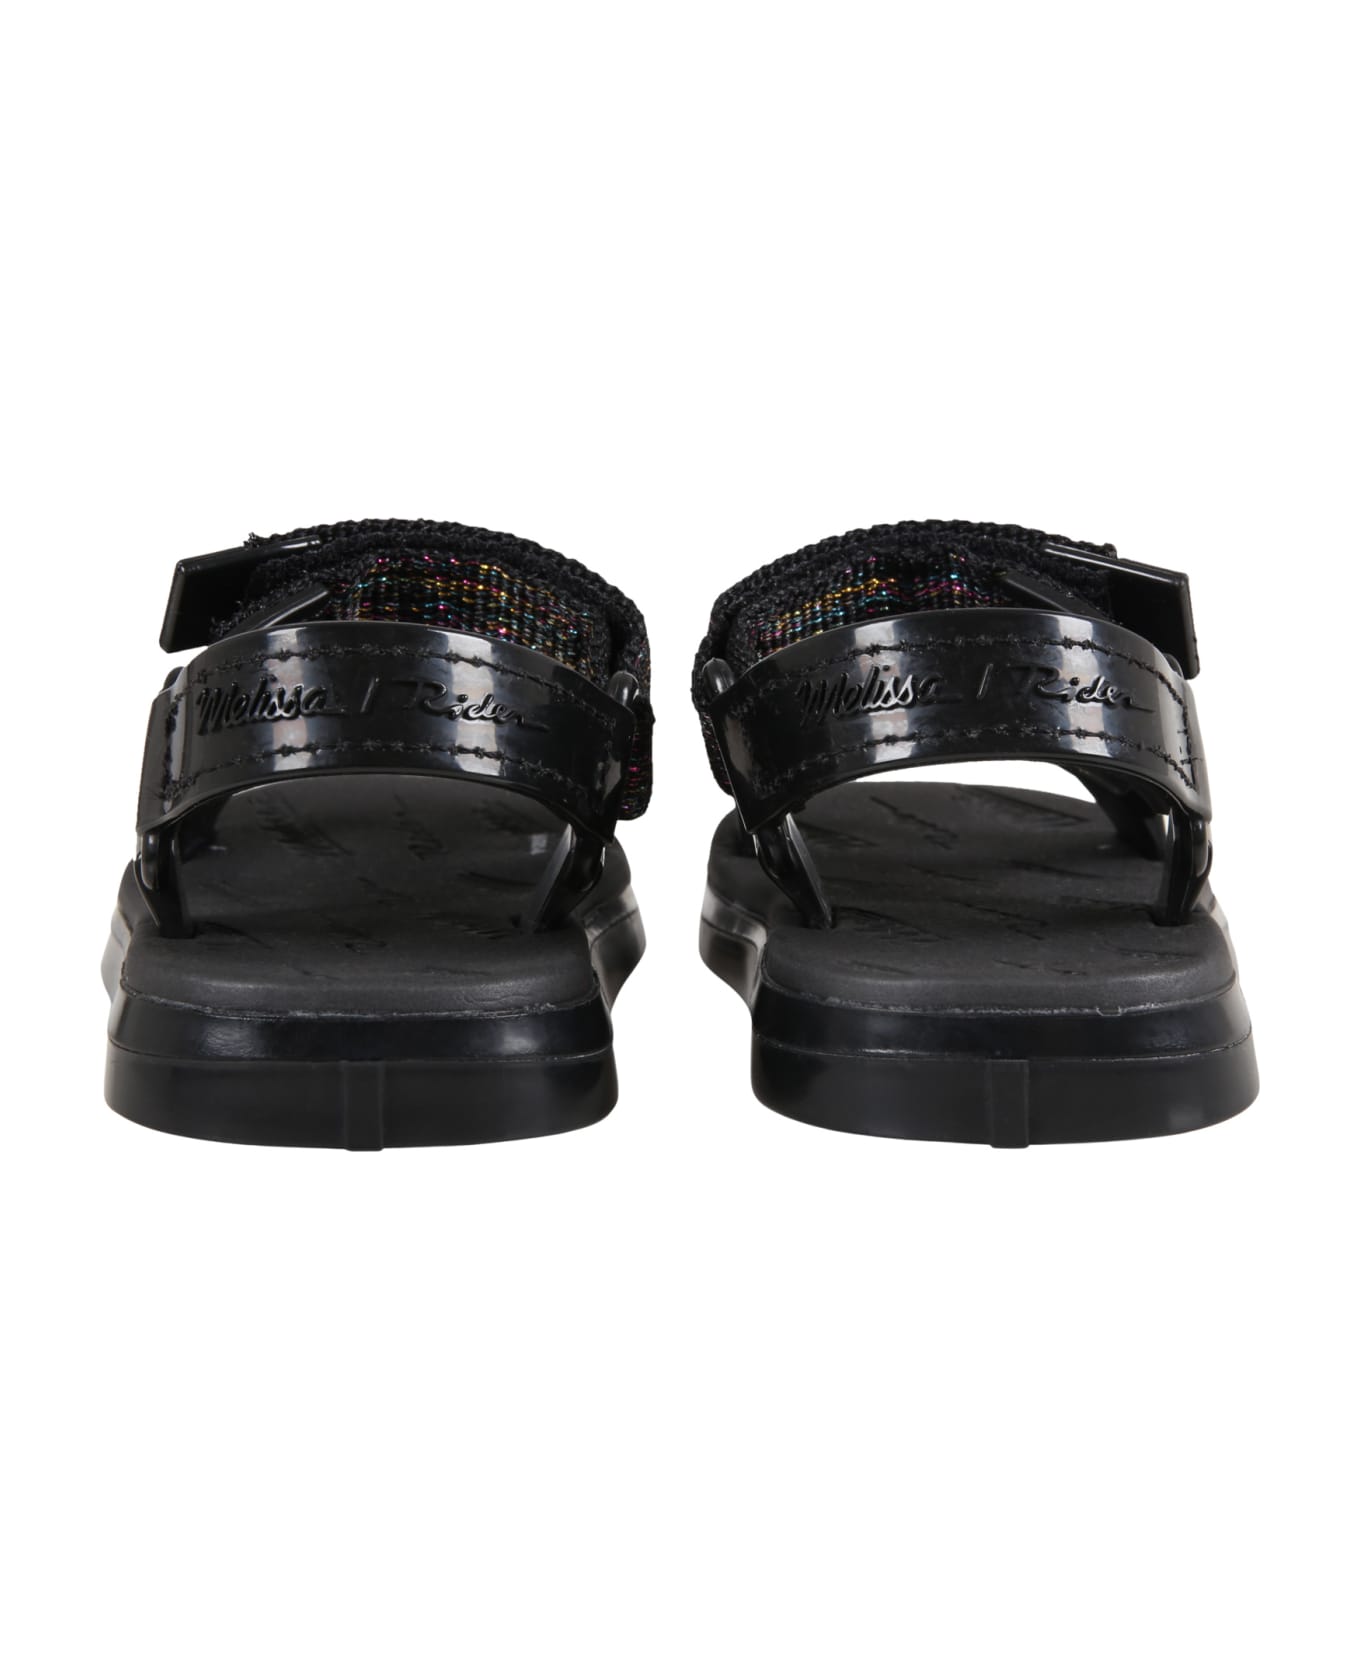 Melissa Black Sandals For Girl With Logo - Black